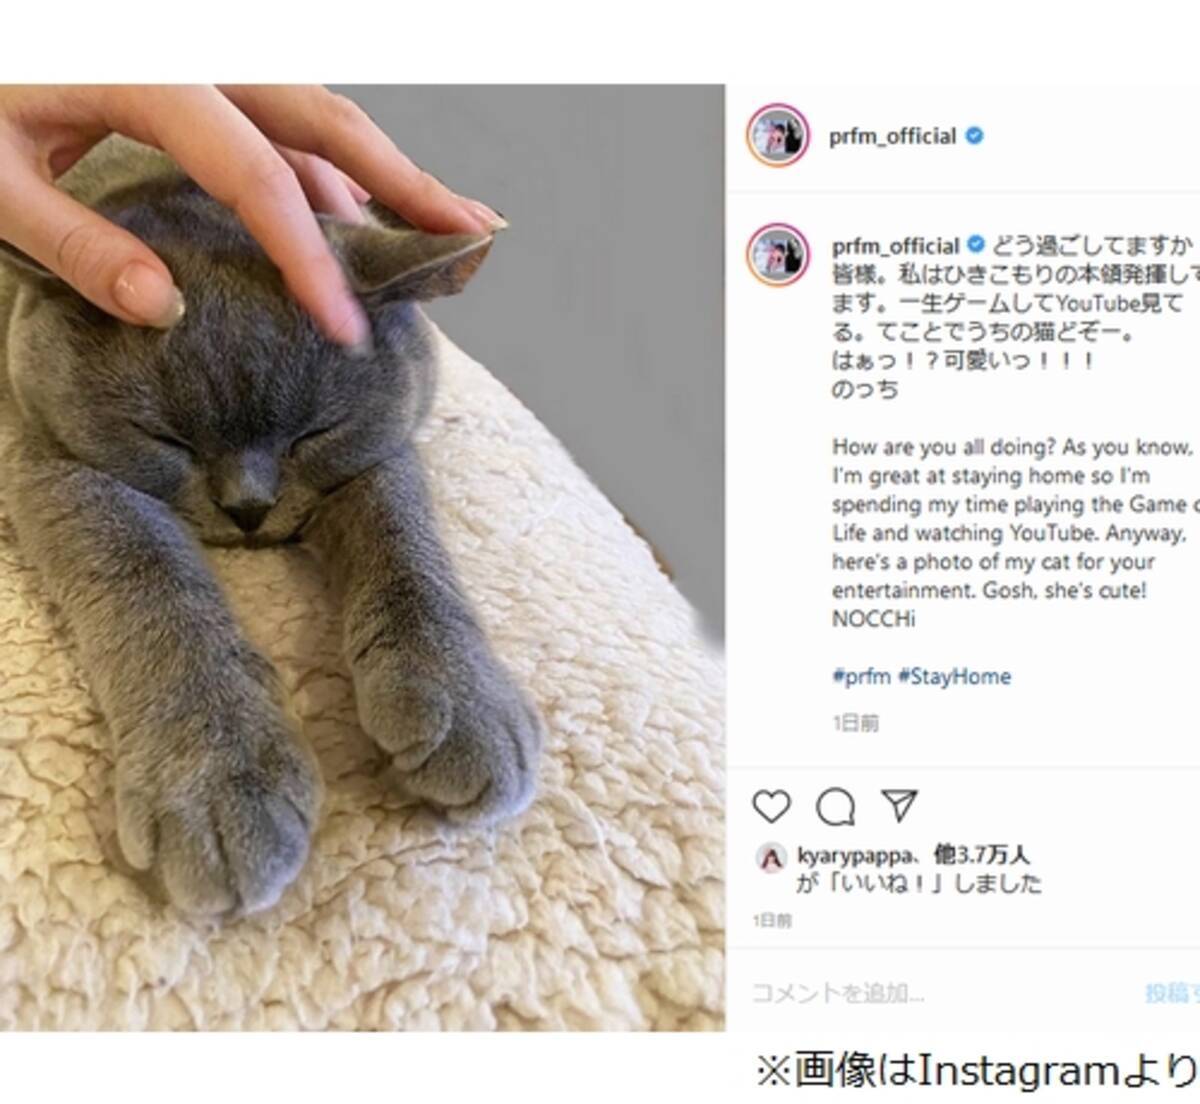 Perfumeのっち ひきこもりの本領発揮 愛猫も激カワ 2020年4月12日